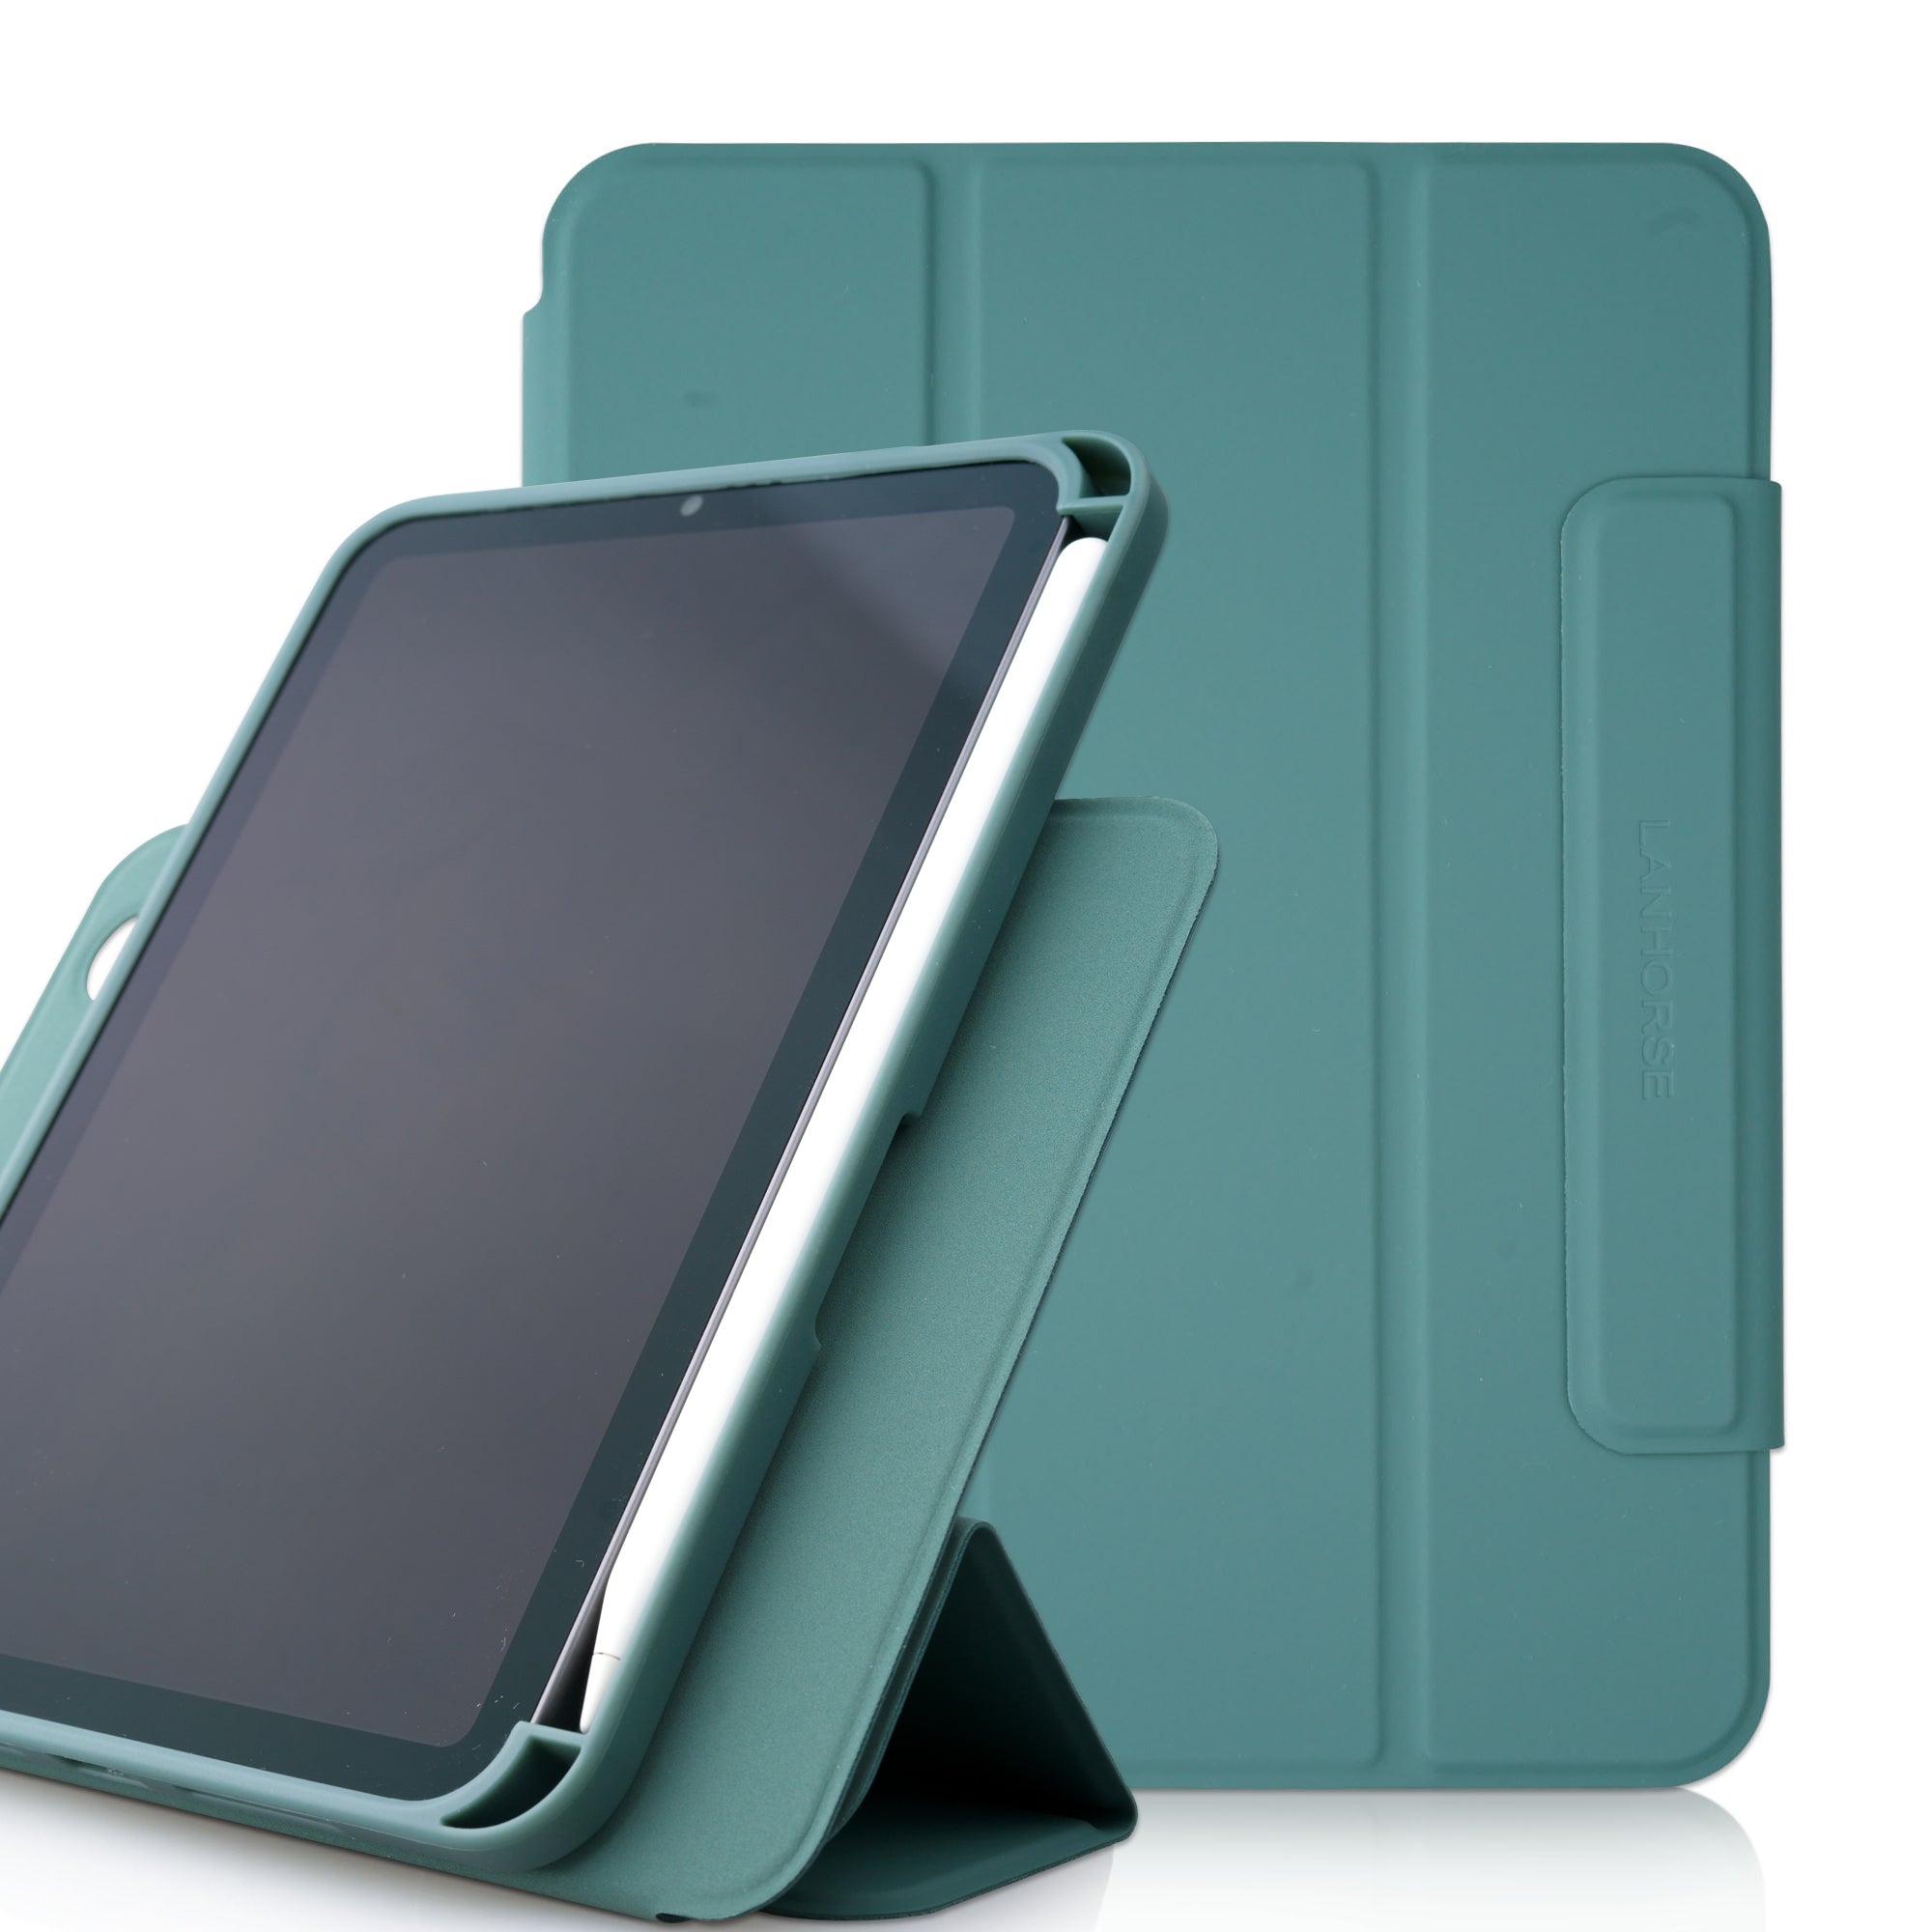 Lanhorse New iPad mini 6 case 8.3inch 2021 release, landscape and port